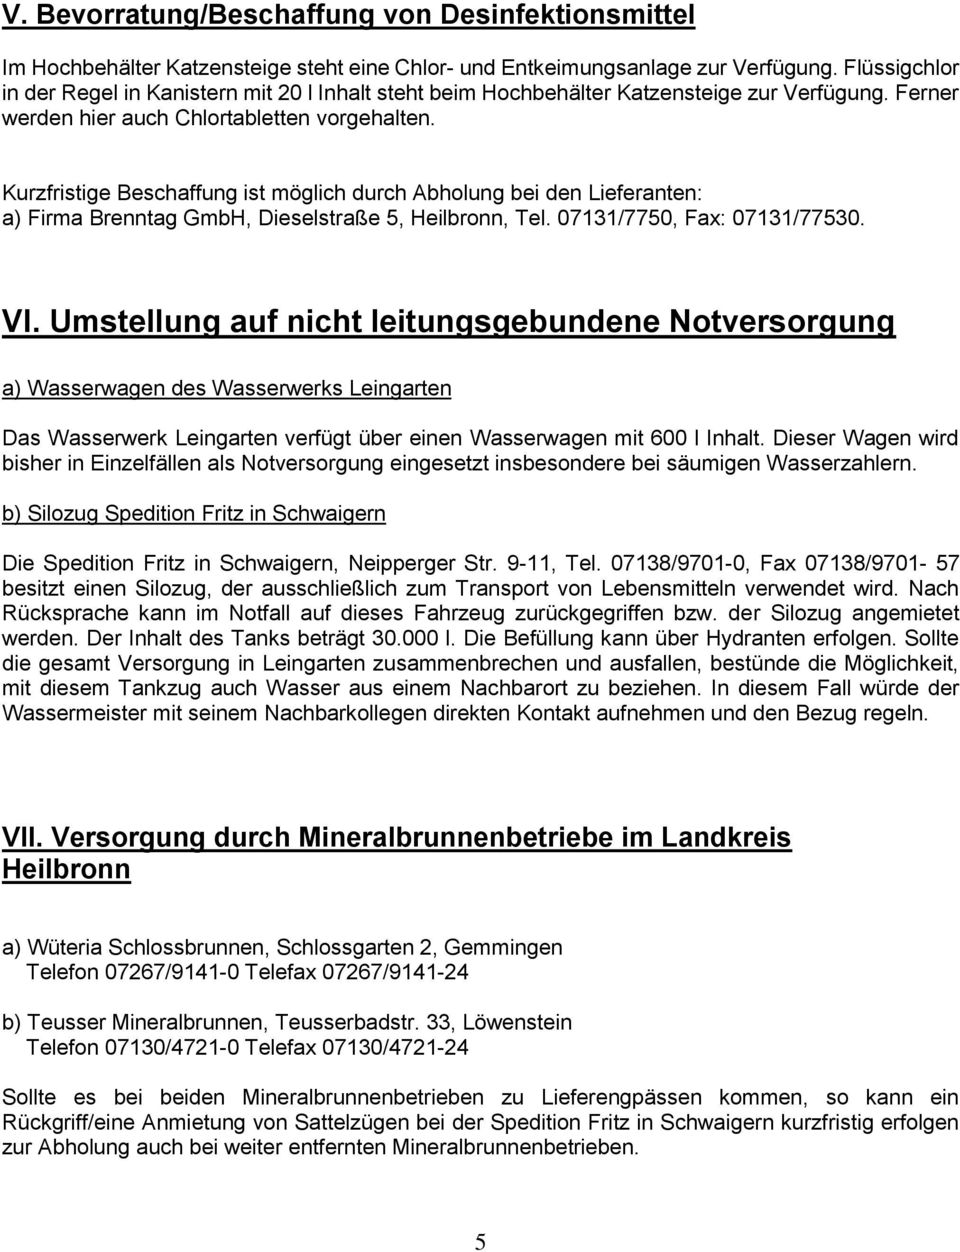 Kurzfristige Beschaffung ist möglich durch Abholung bei den Lieferanten: a) Firma Brenntag GmbH, Dieselstraße 5, Heilbronn, Tel. 07131/7750, Fax: 07131/77530. VI.